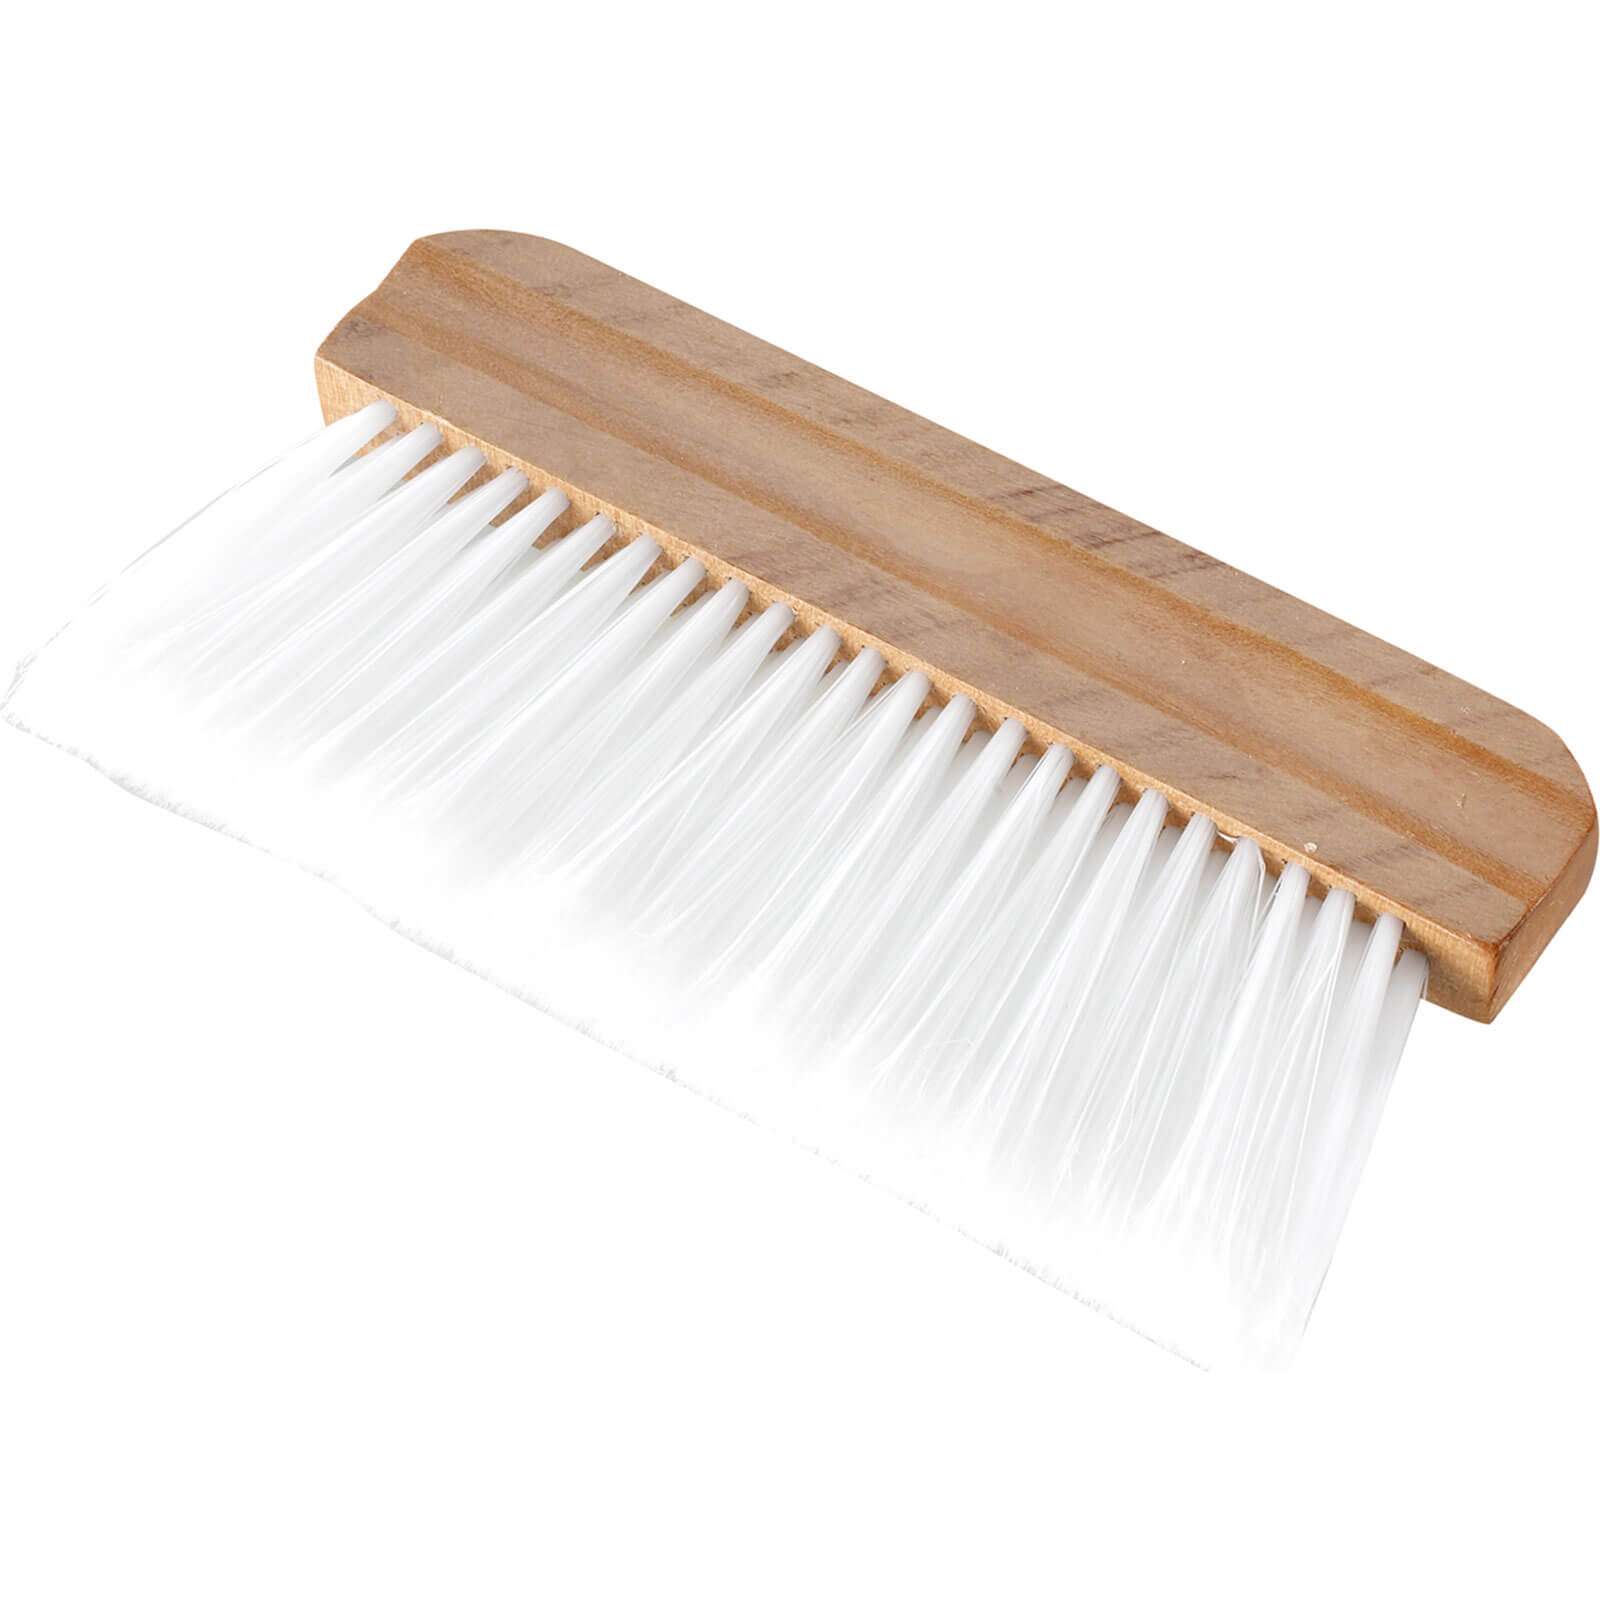 Stanley Decor Paperhanging Brush 0 29 593